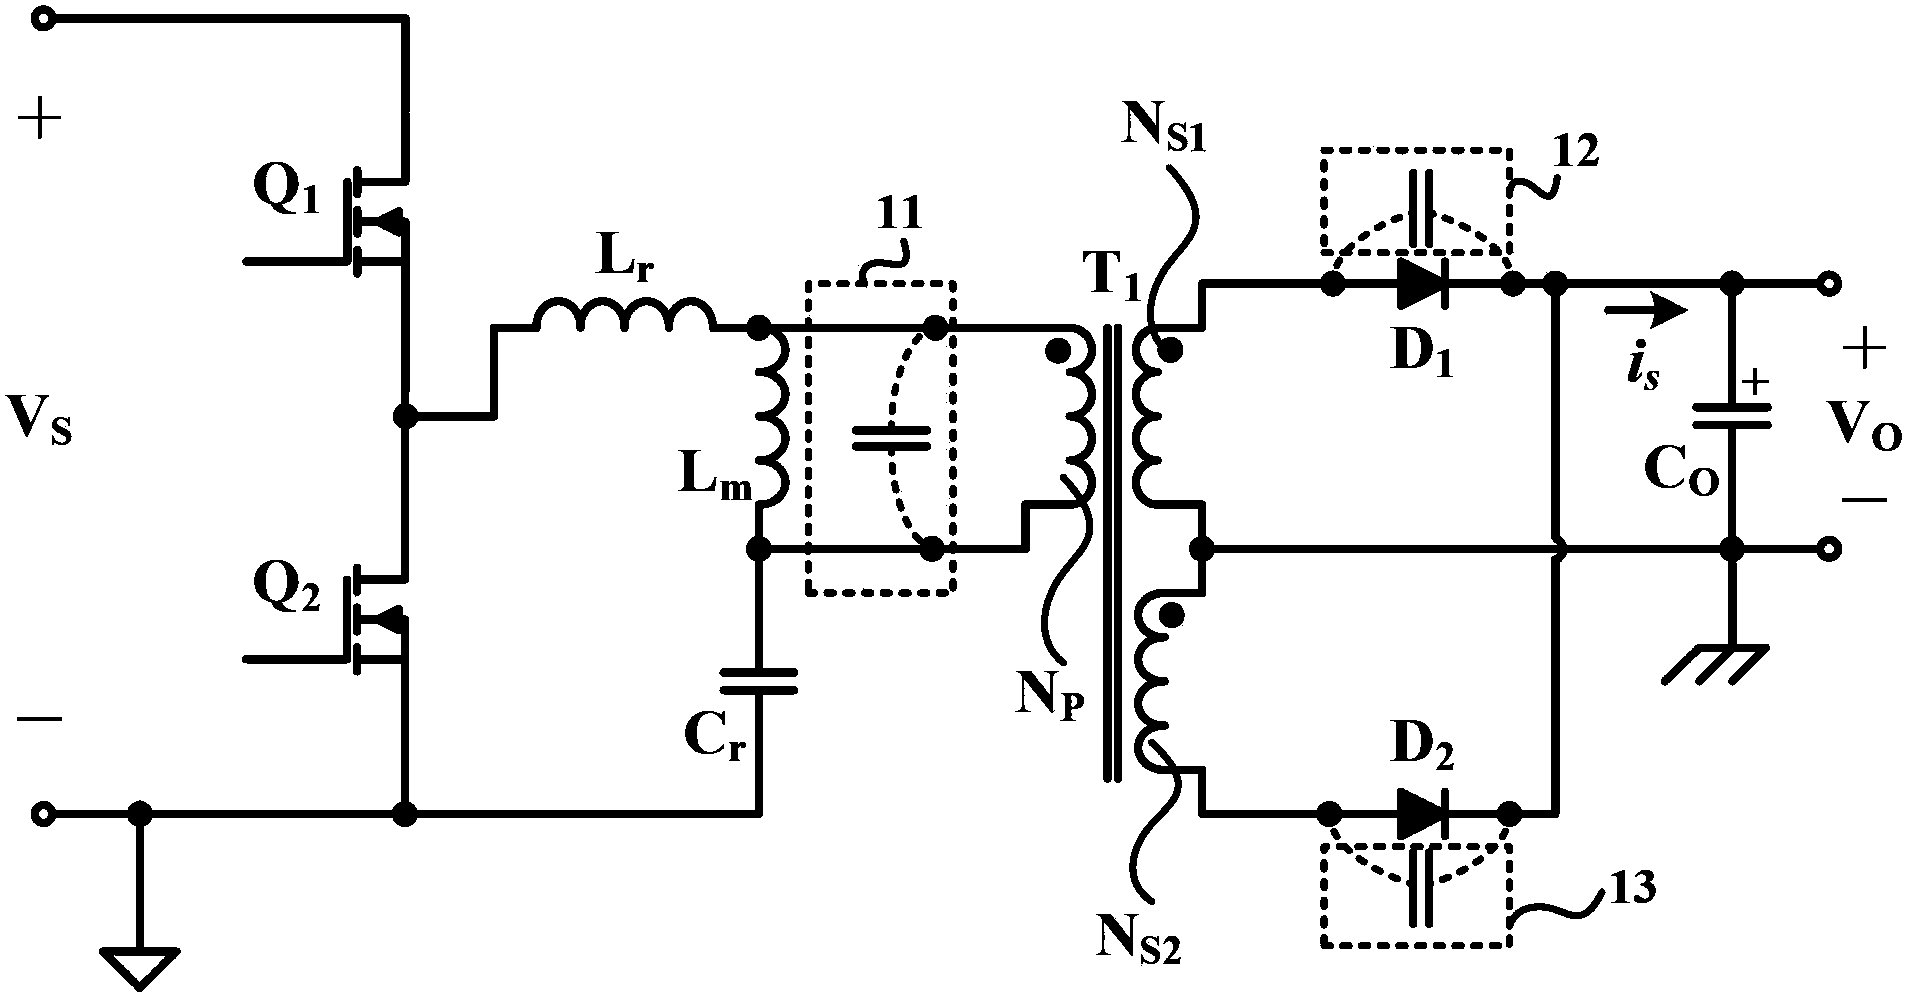 LLC series resonance power converter